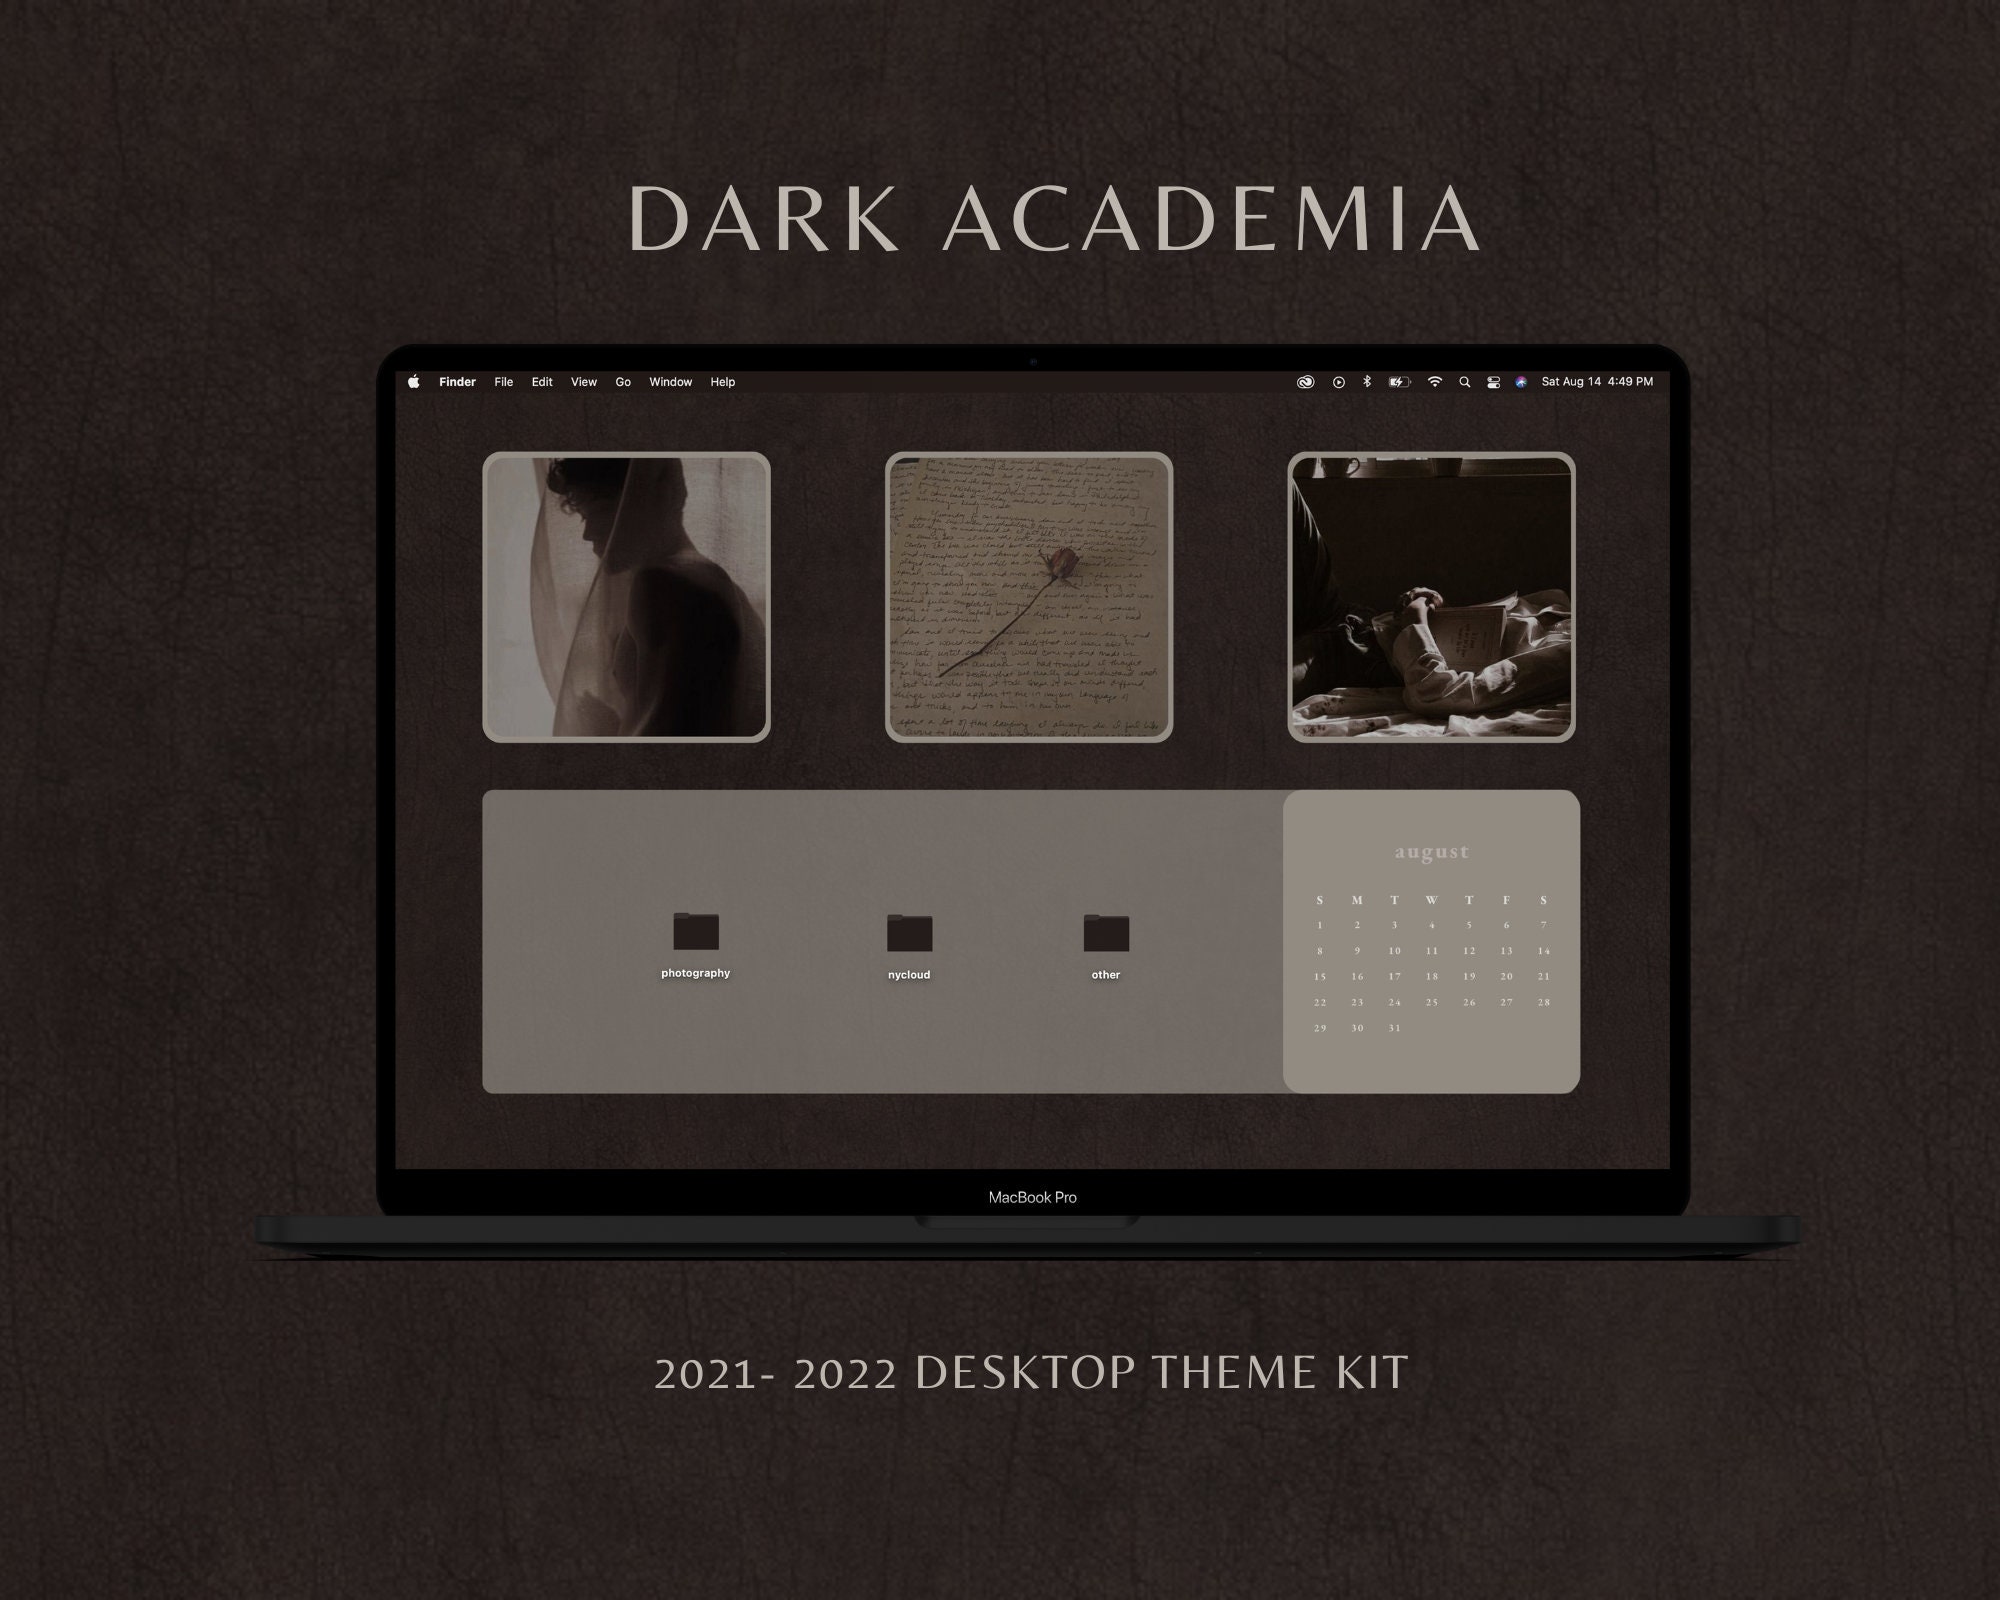 Dark Academia Desktop Wallpaper And Folders 2021 2022